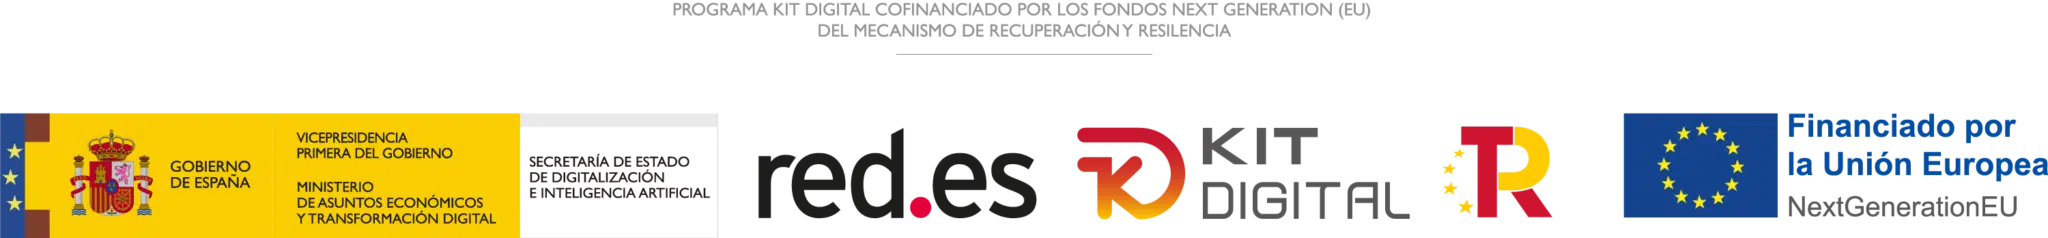 Kit Digital Logo ministerio